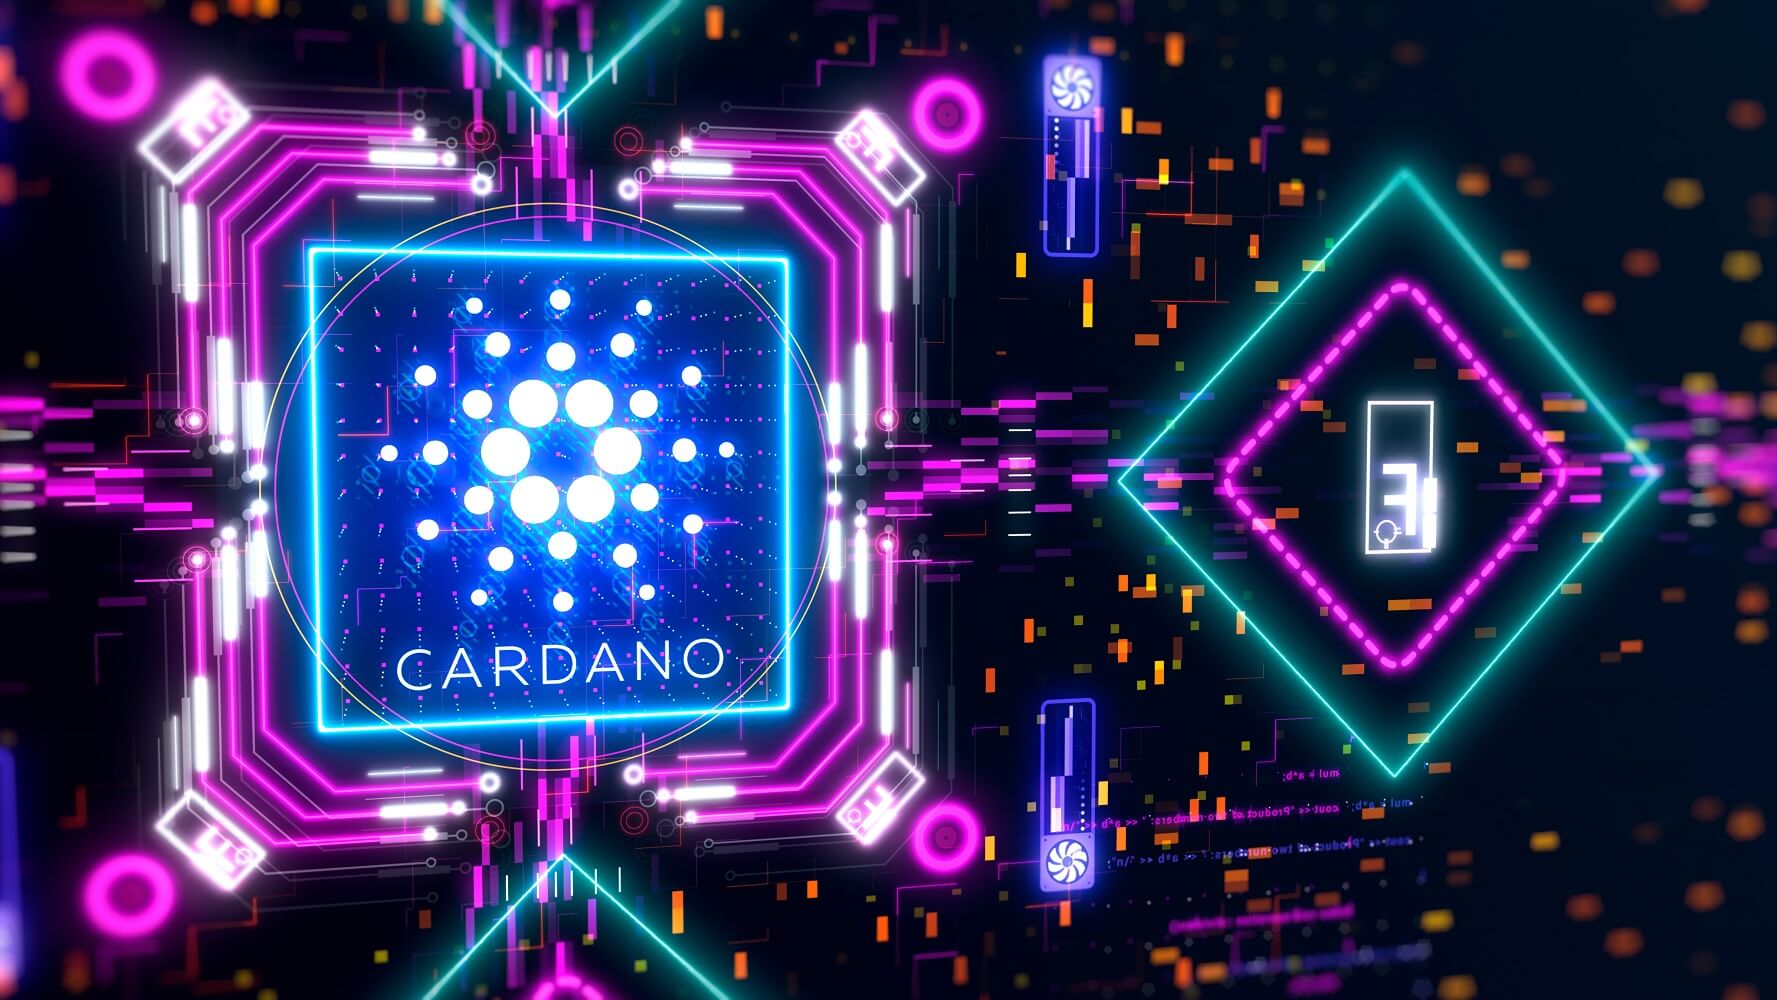 The Cardano blockchain